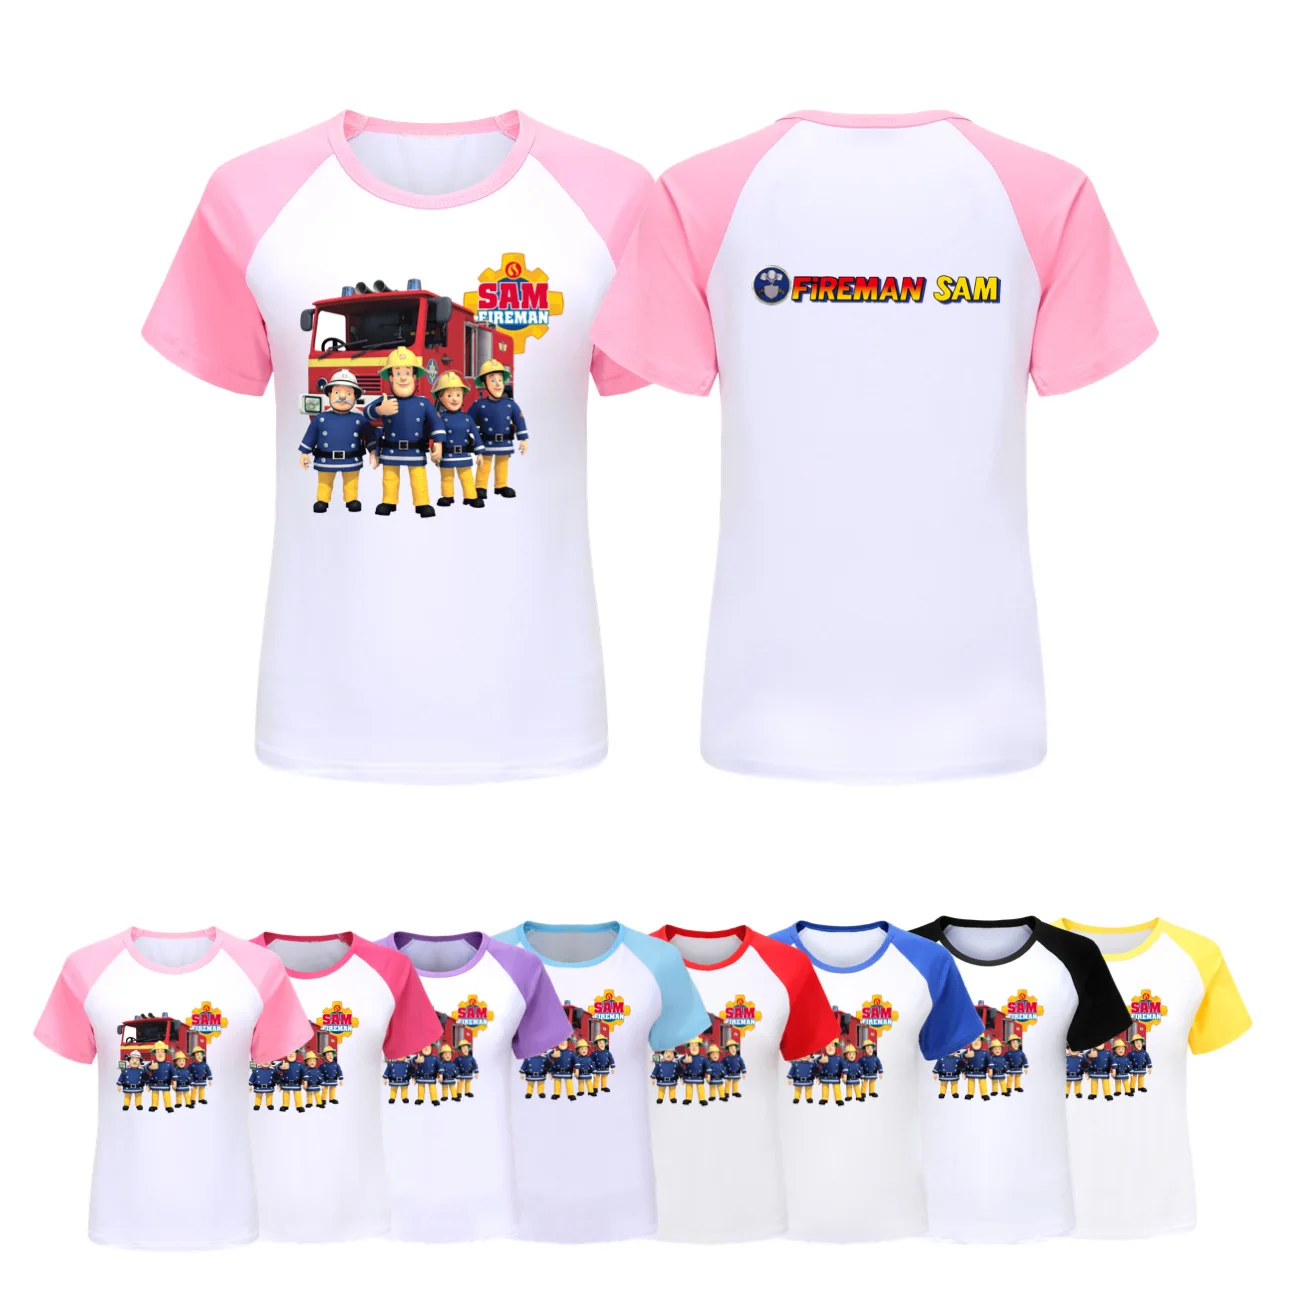 

FIREMAN SAM Tshirt Kids Cartoon Fire Fighter Clothes Teenager Boys O-Neck Tops Girls Short Sleeves T-shirts Children's Clothing